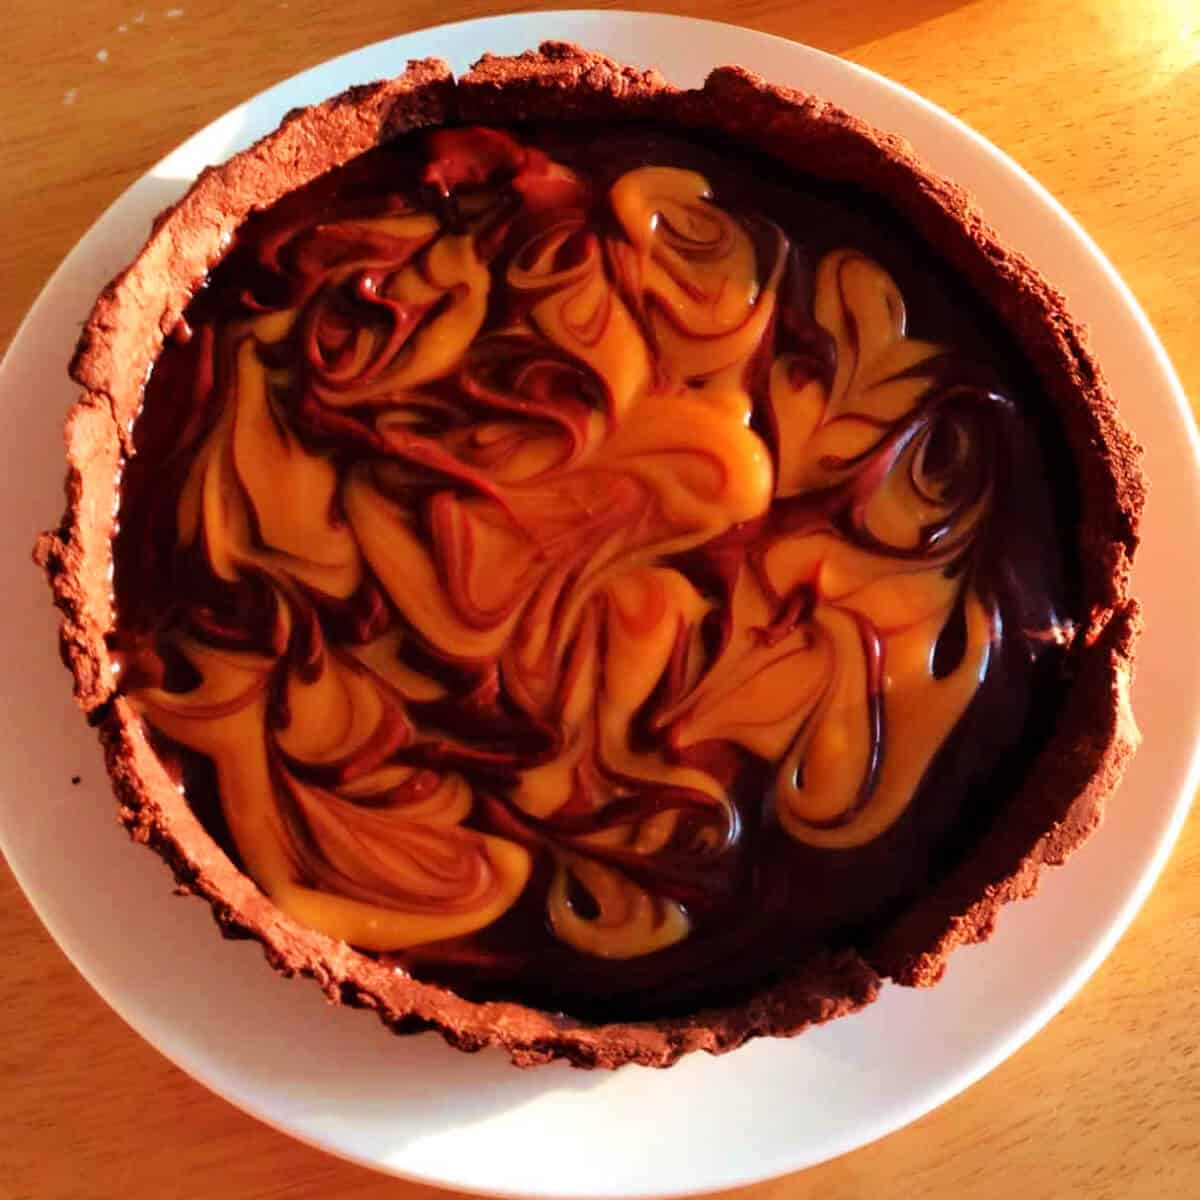 Chocolate salted caramel swirl tart on a white plate.